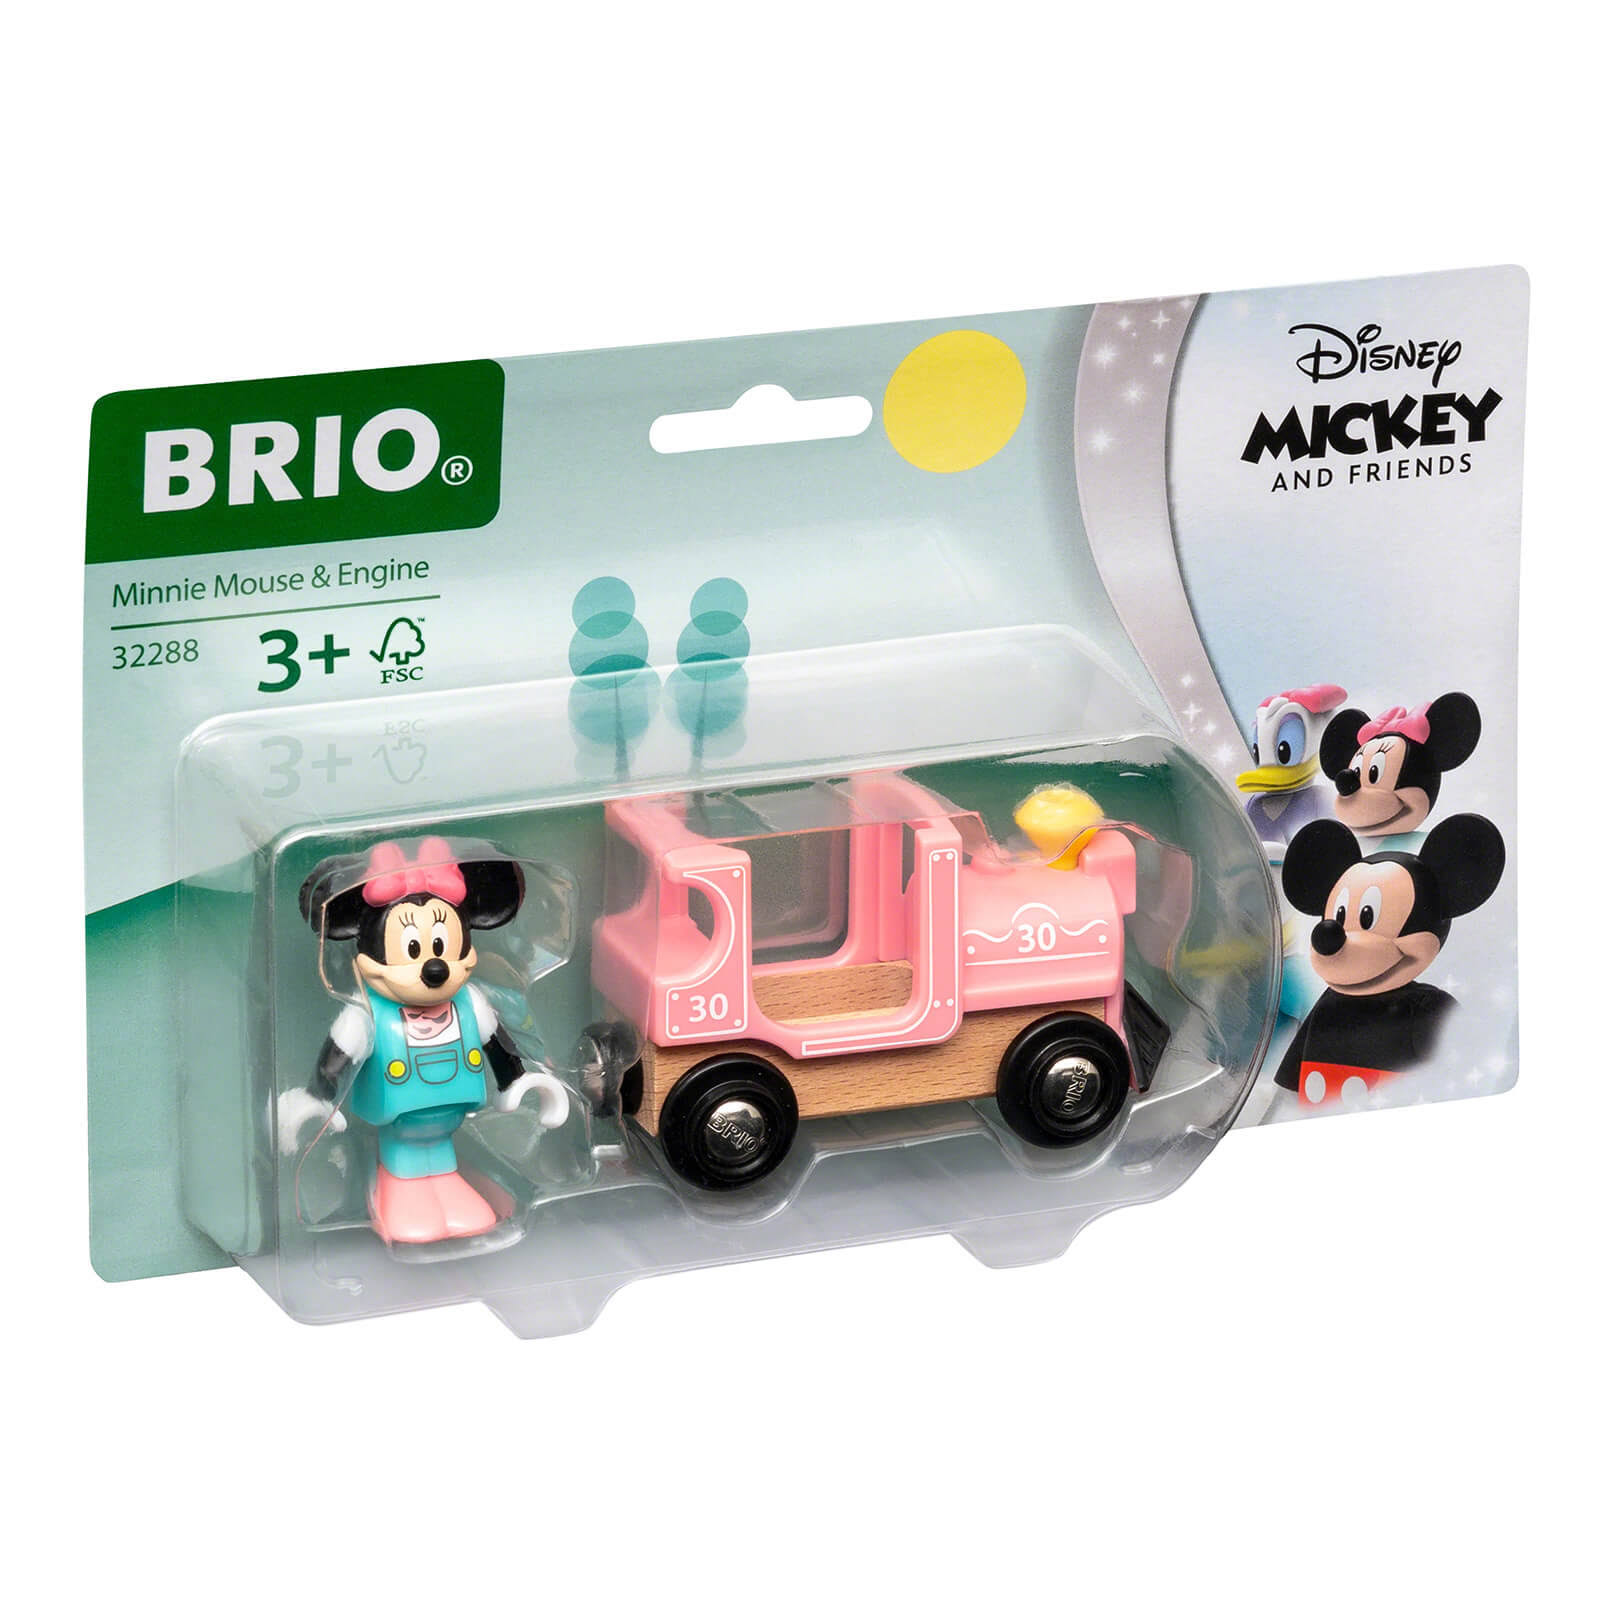 BRIO Minnie Mouse & Train Set